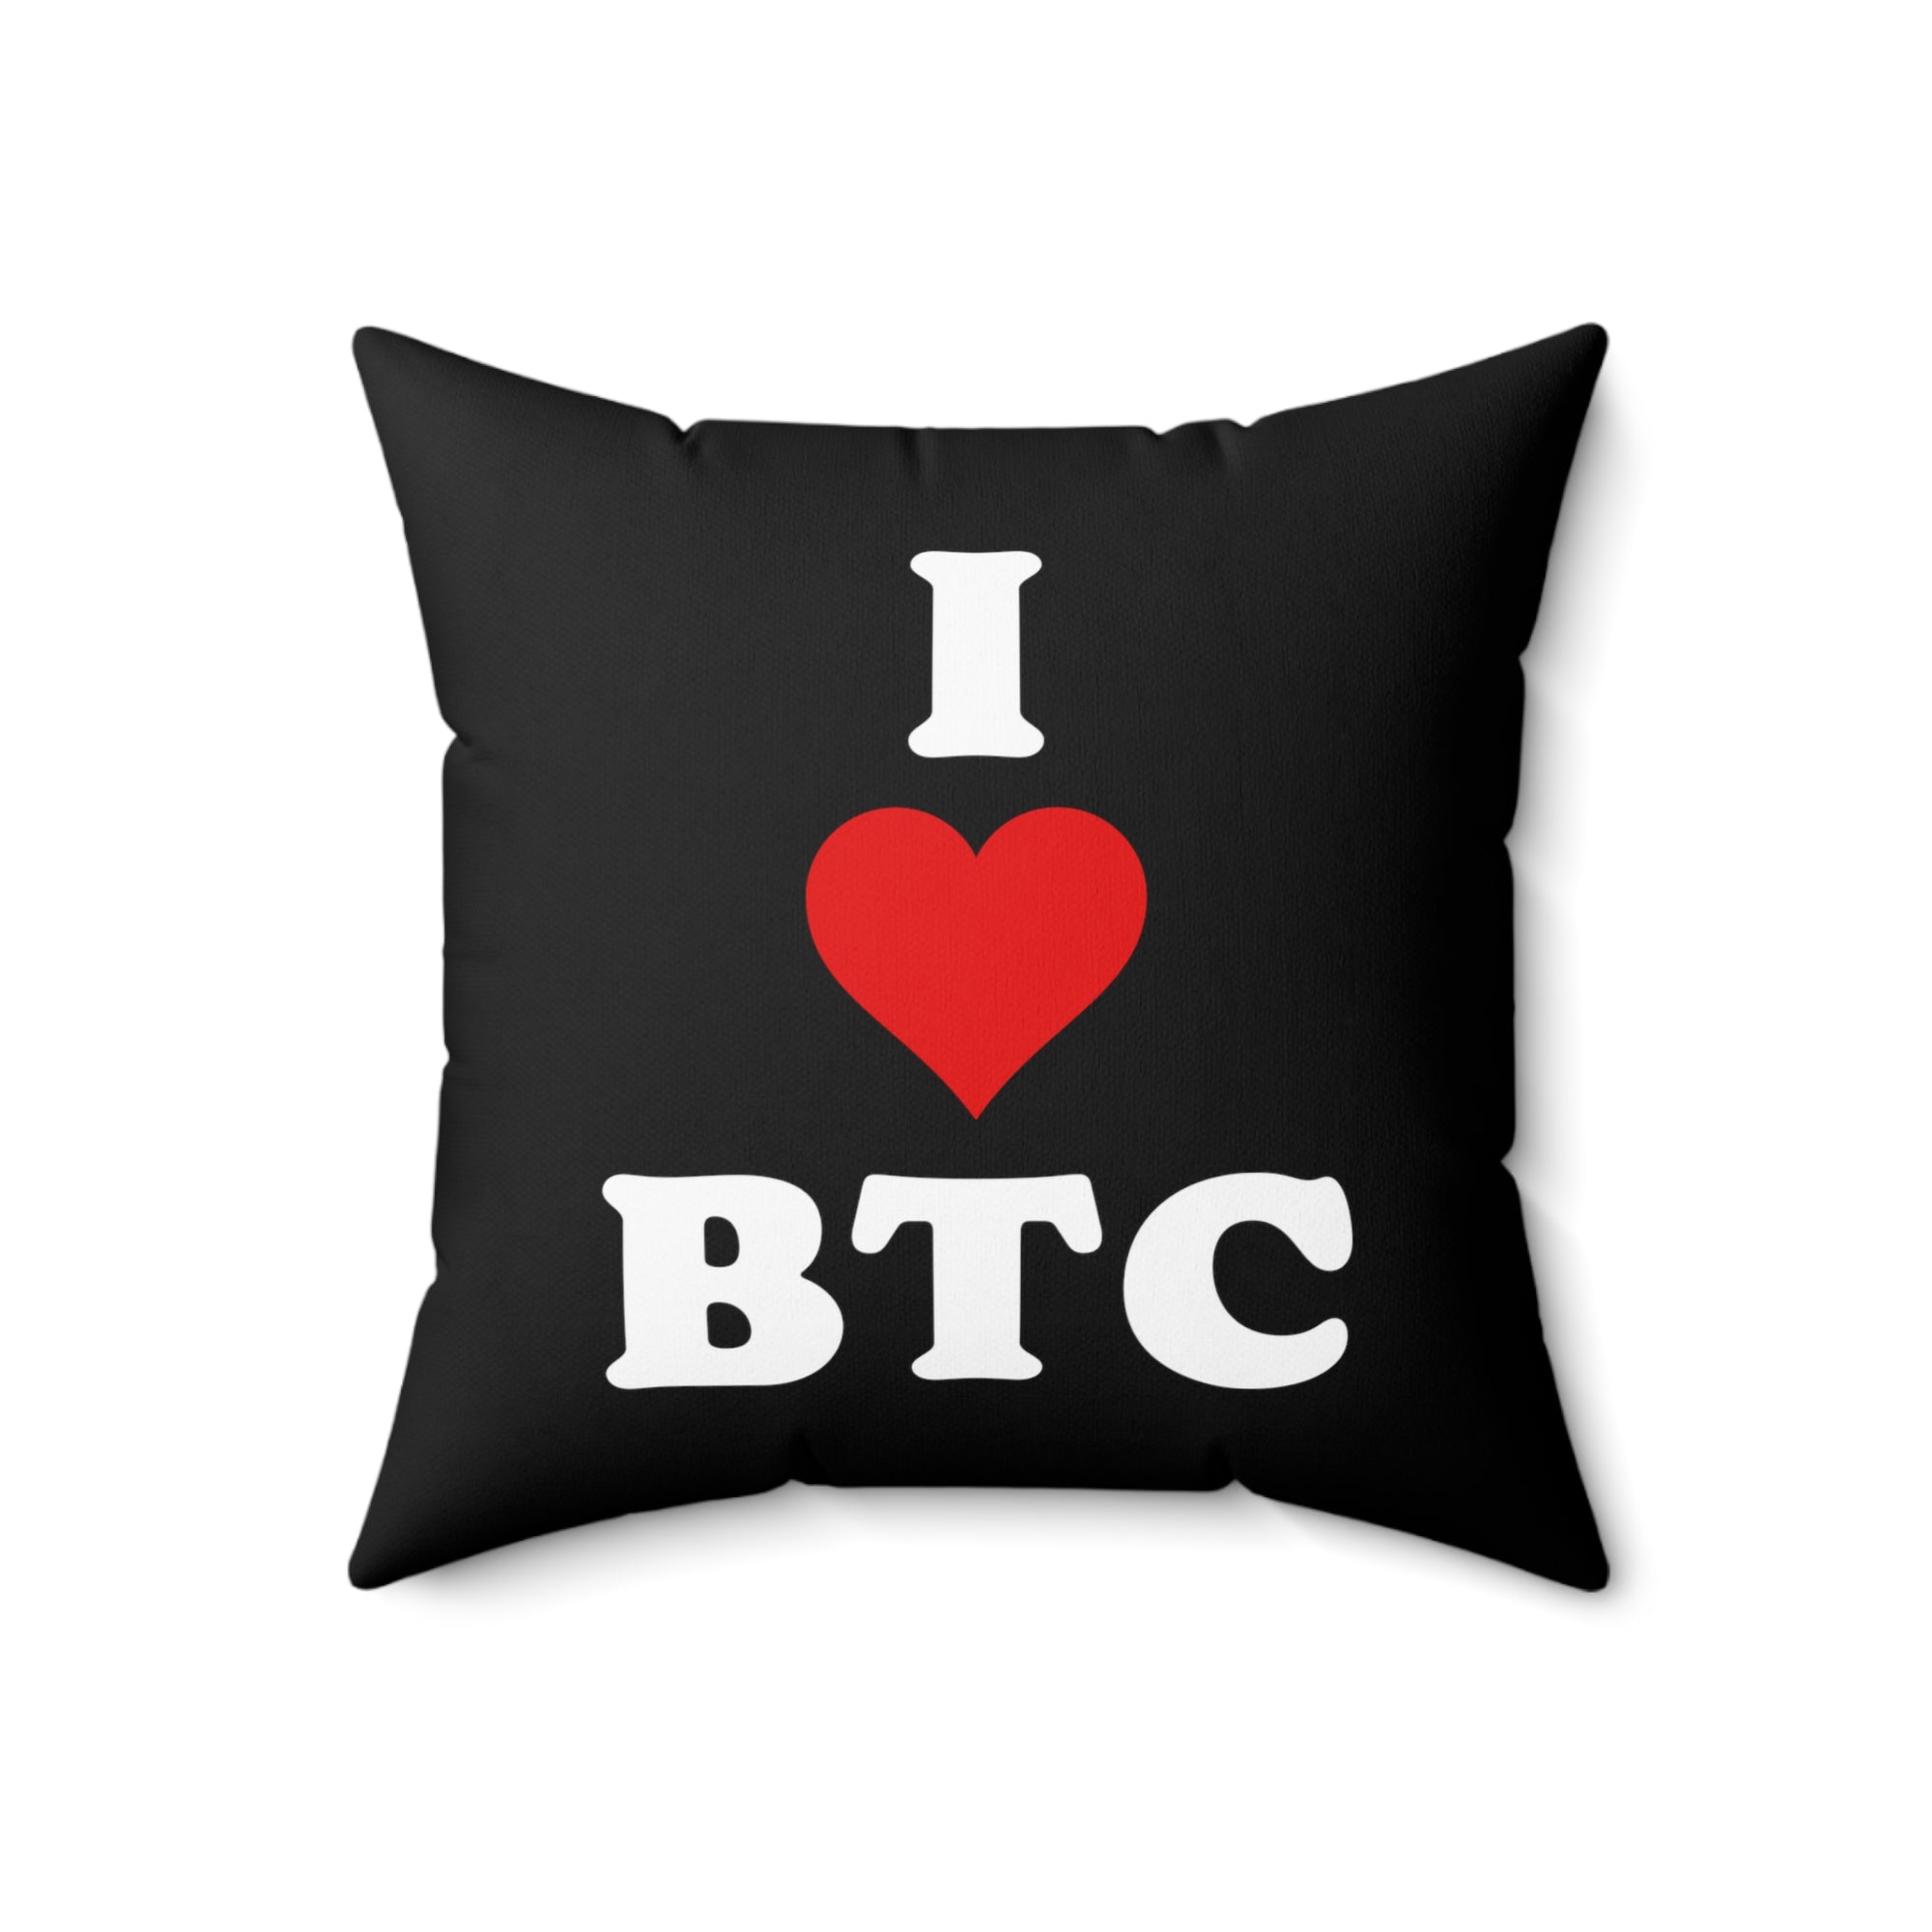 Bitcoin Merchandise - I Love Bitcoin Pillow (Retro). Close Up View.